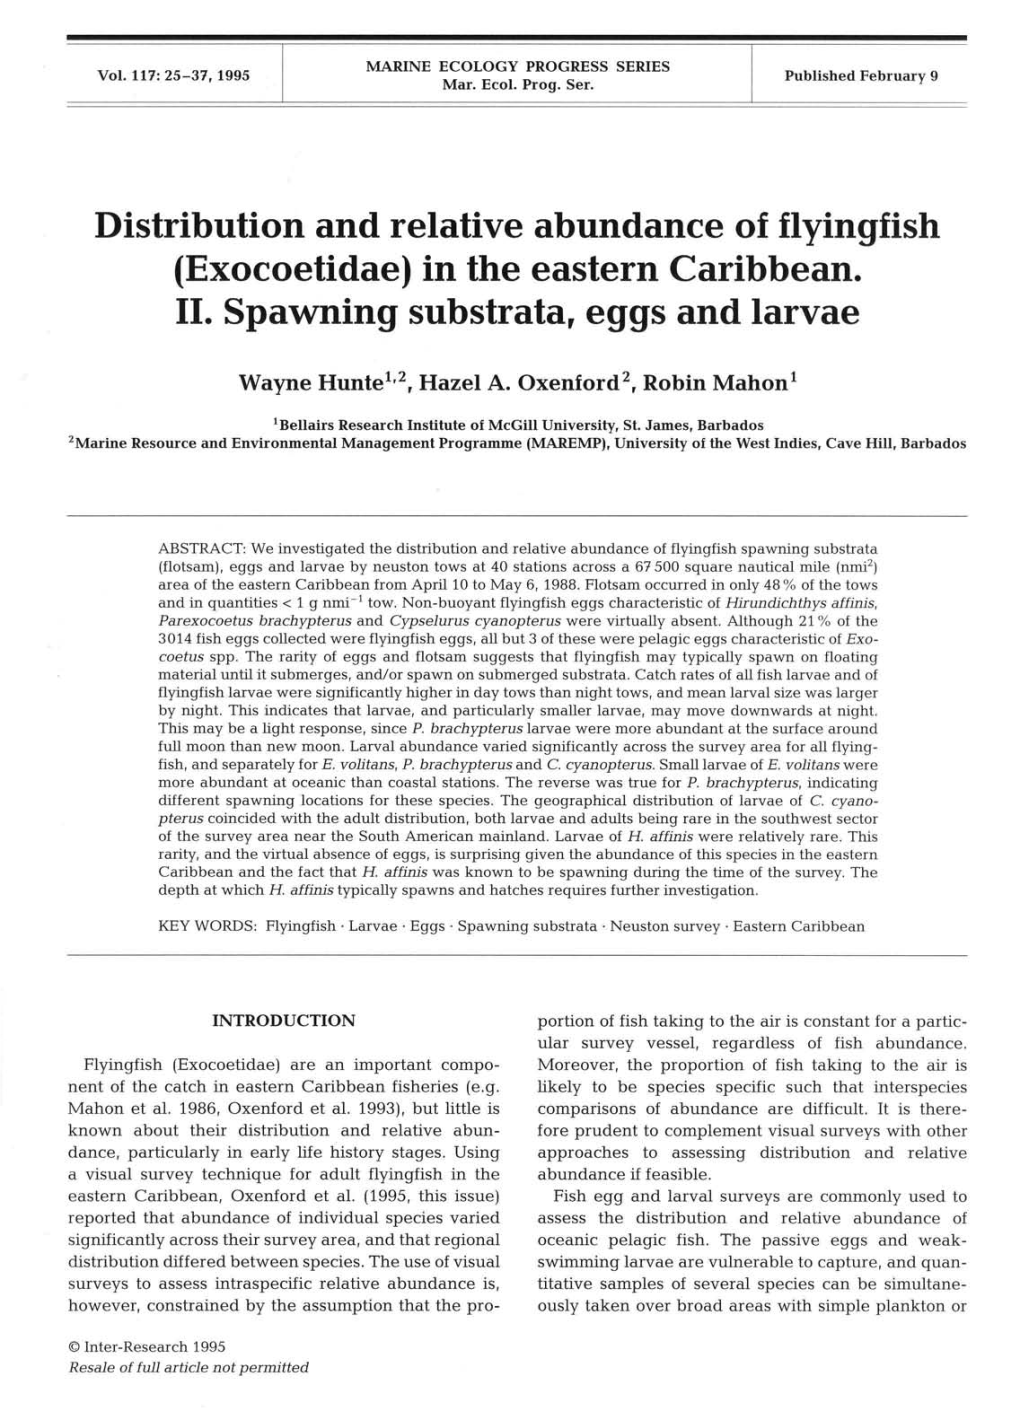 Distribution and Relative Abundance of Flyingfish (Exocoetidae) in the Eastern Caribbean